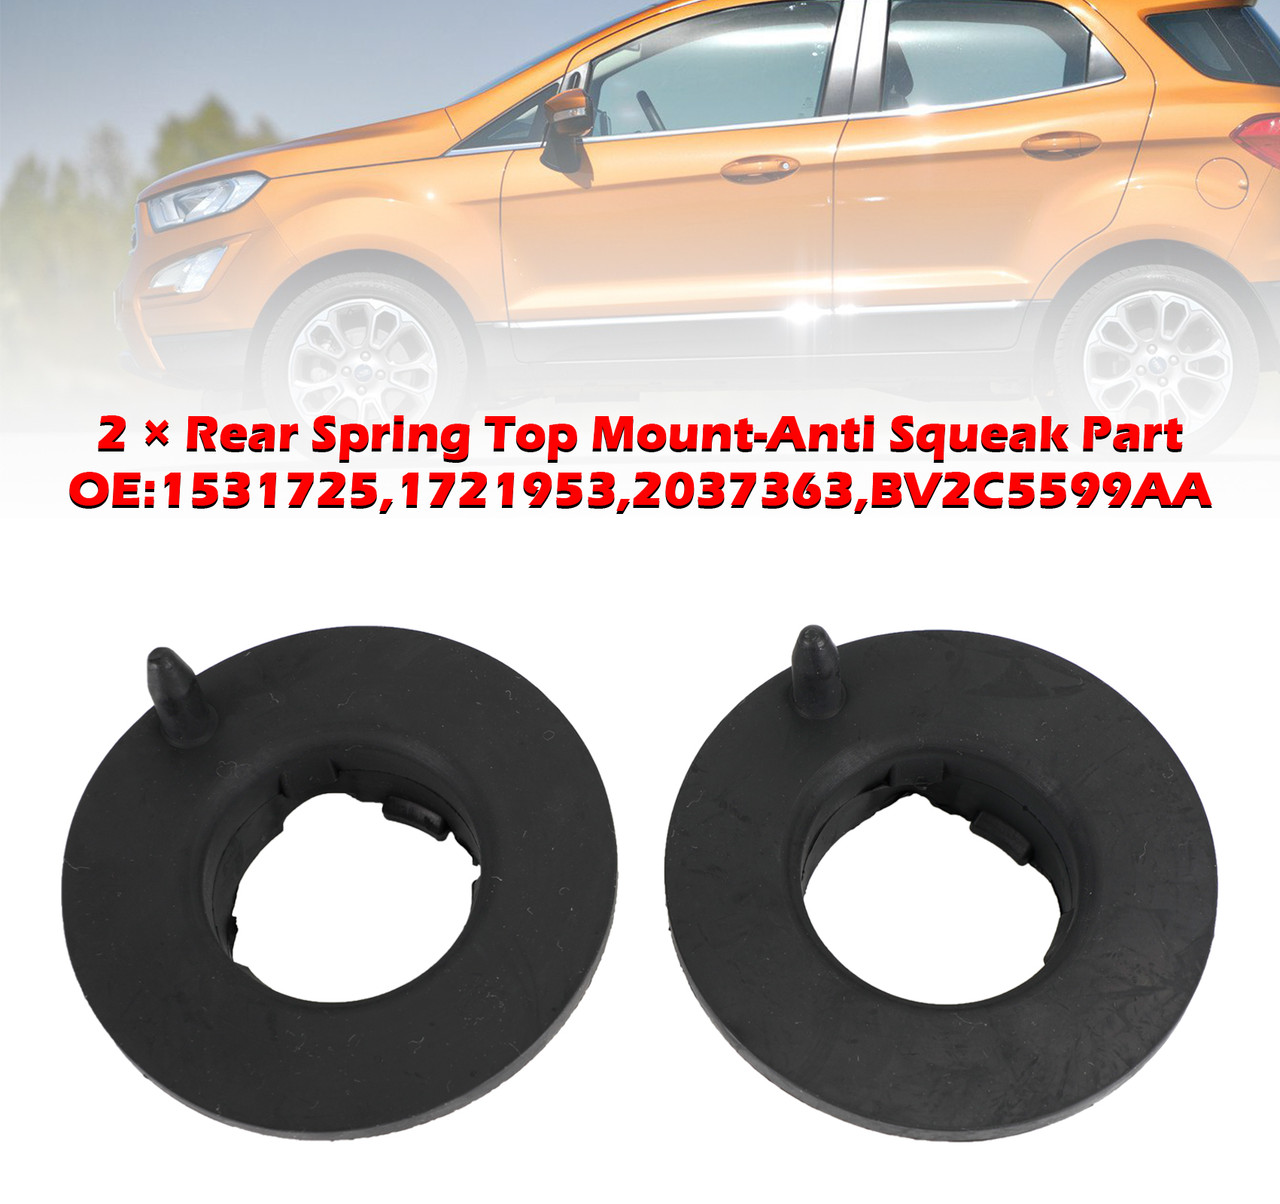 2PCS Rear Spring Top Mount-Anti Squeak Part for Ford Fiesta Mk7 09-17 1531725